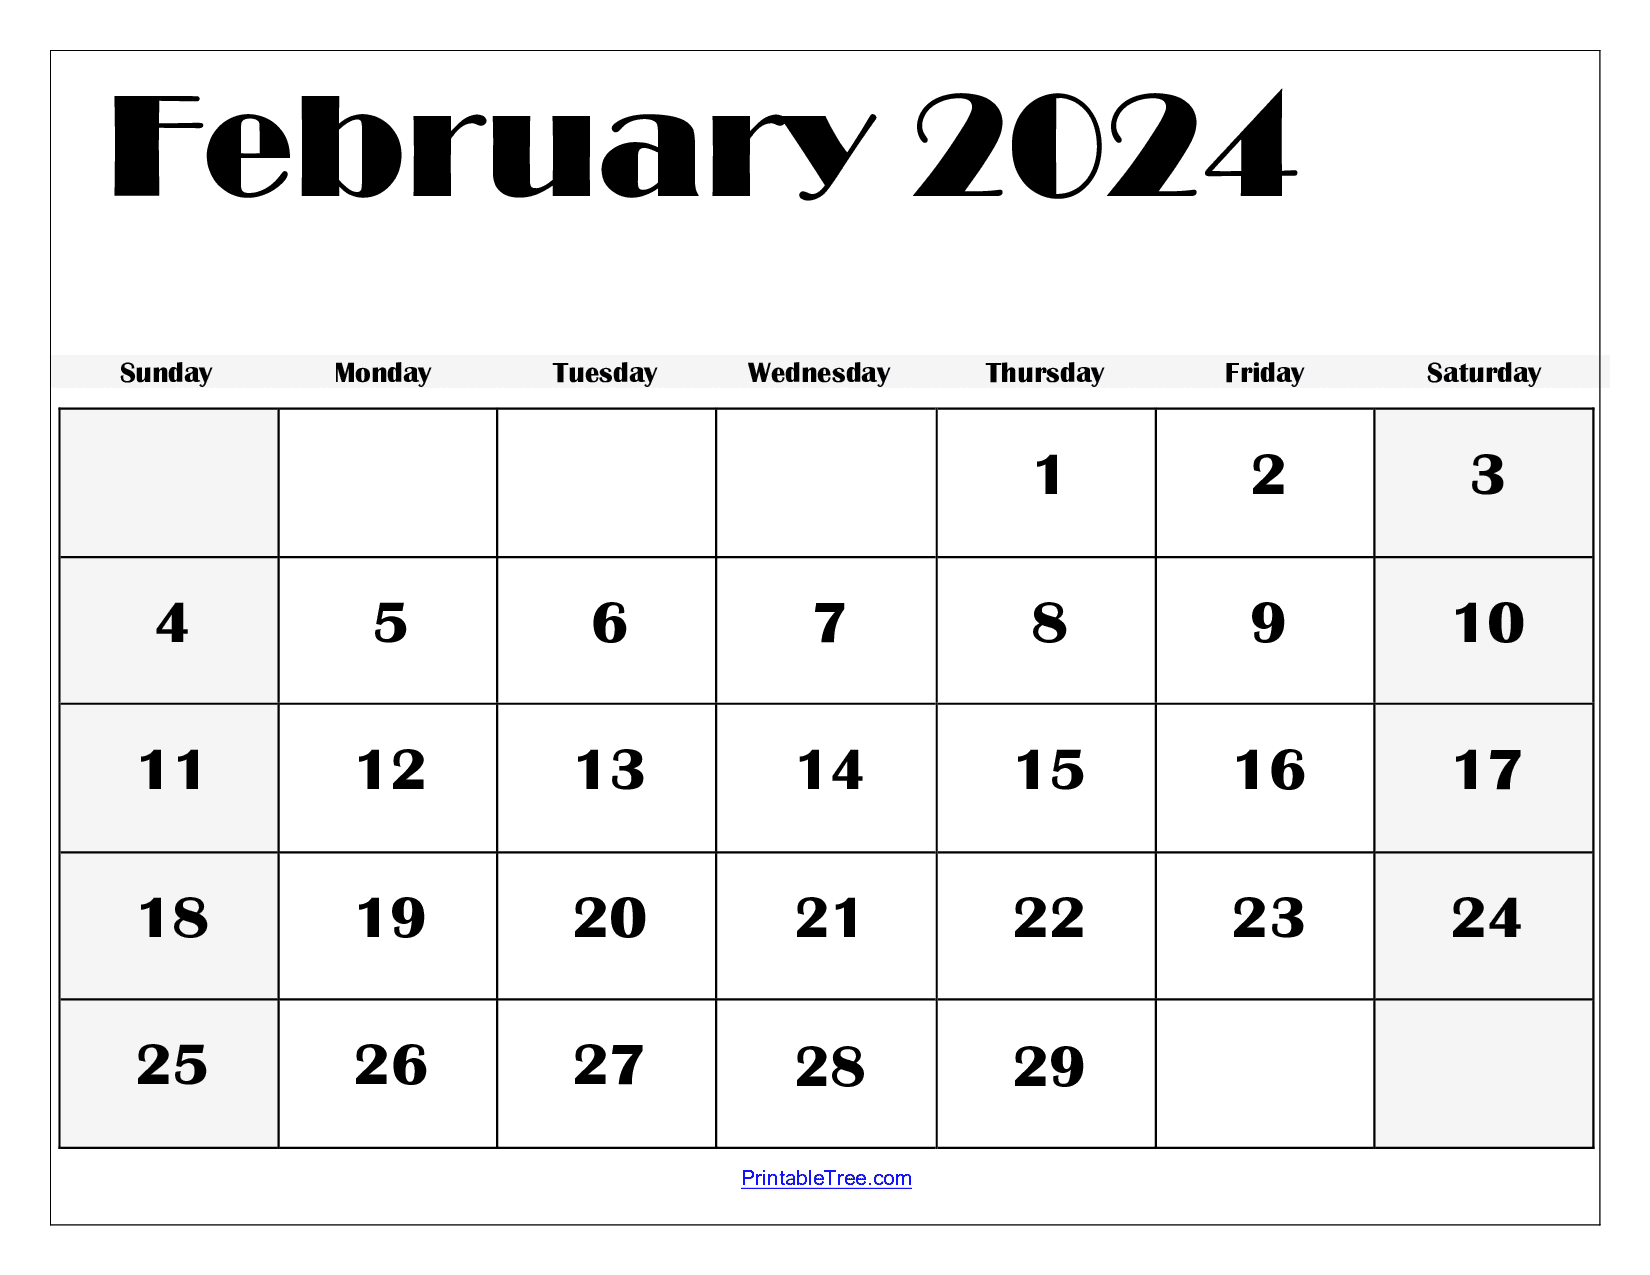 February 2024 Calendar Printable Pdf Template With Holidays for Febuary 2024 Printable Calendar